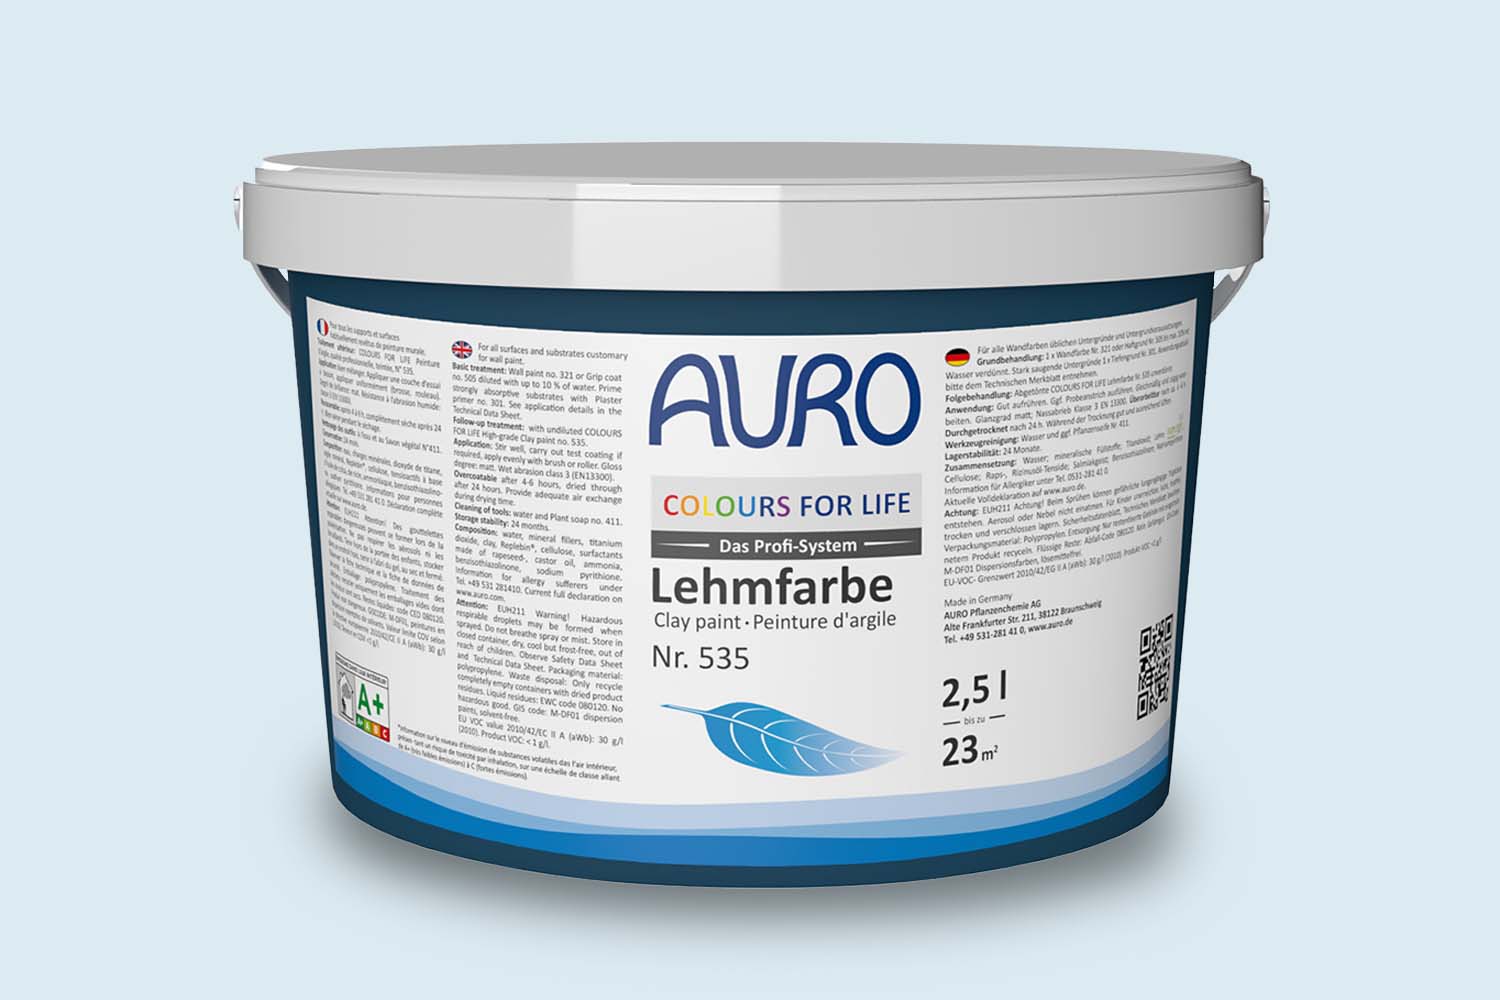 Auro Profi-Lehmfarbe Nr. 535 ice fjord Colours For Life